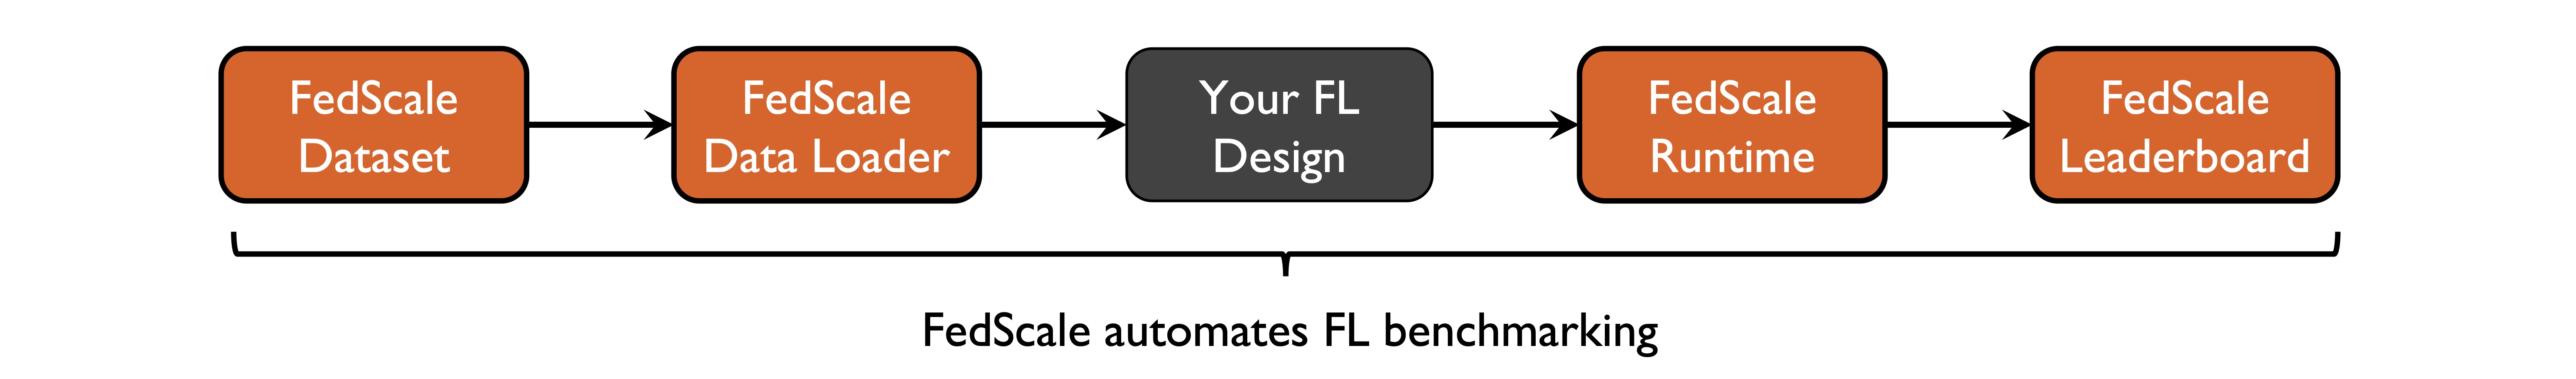 FedScale automates federated learning benchmarking